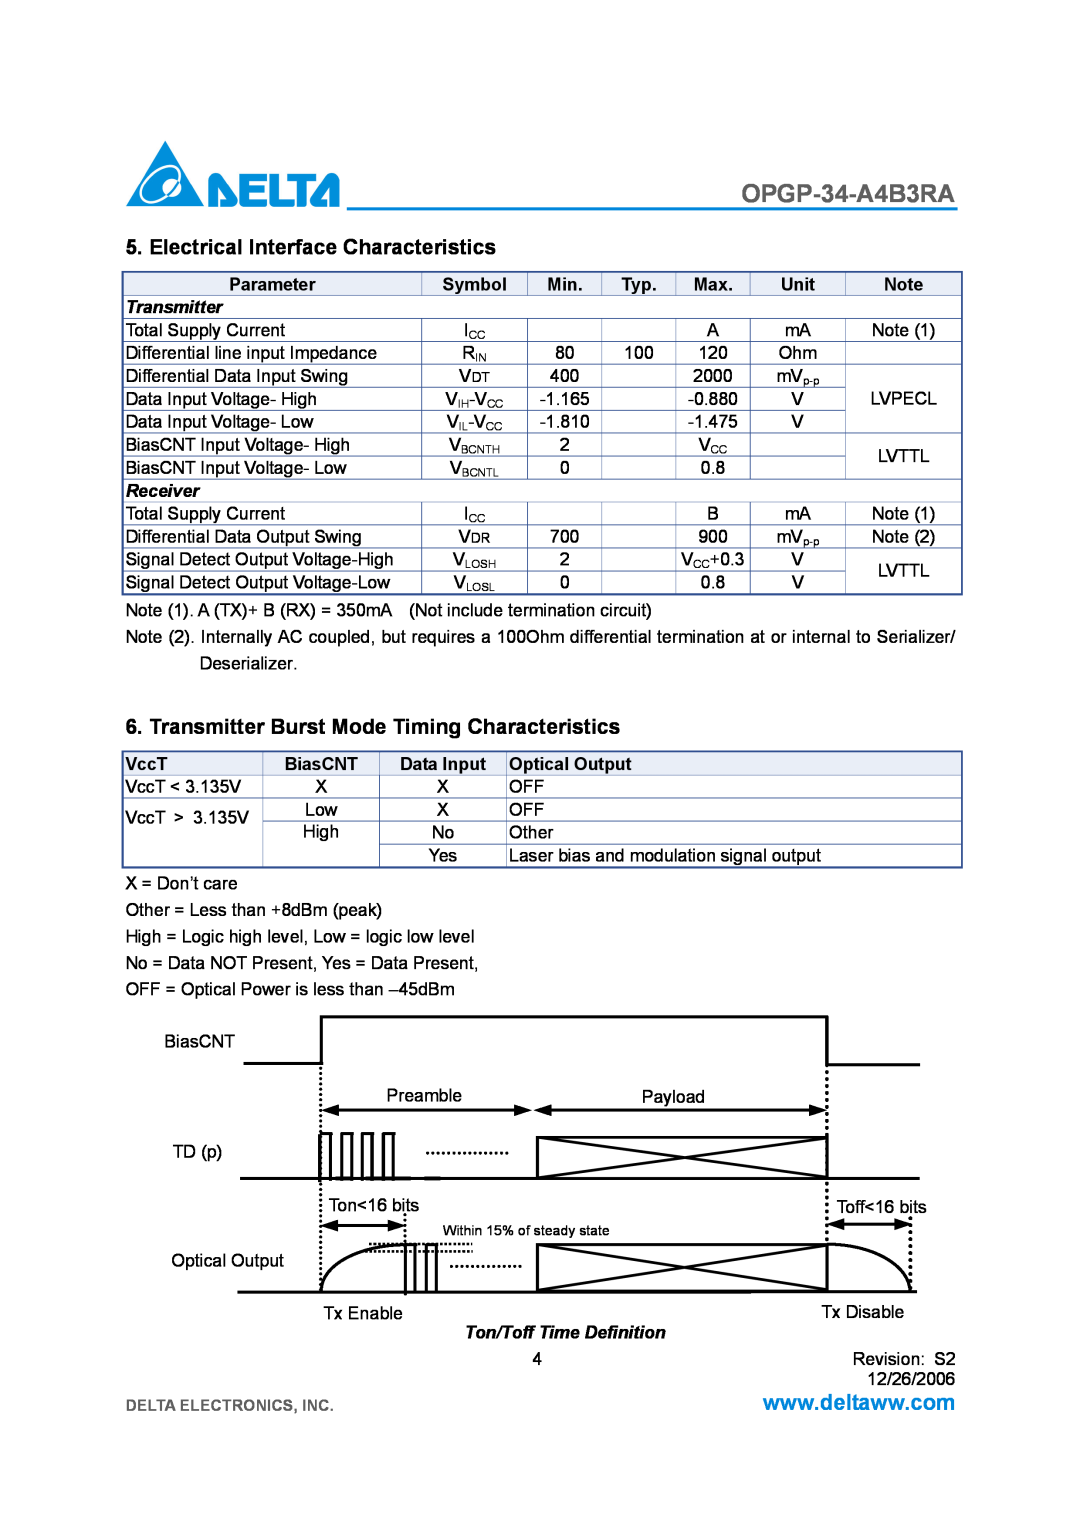 Delta Electronics OPGP-34-A4B3RA manual Electrical Interface Characteristics, Transmitter Burst Mode Timing Characteristics 